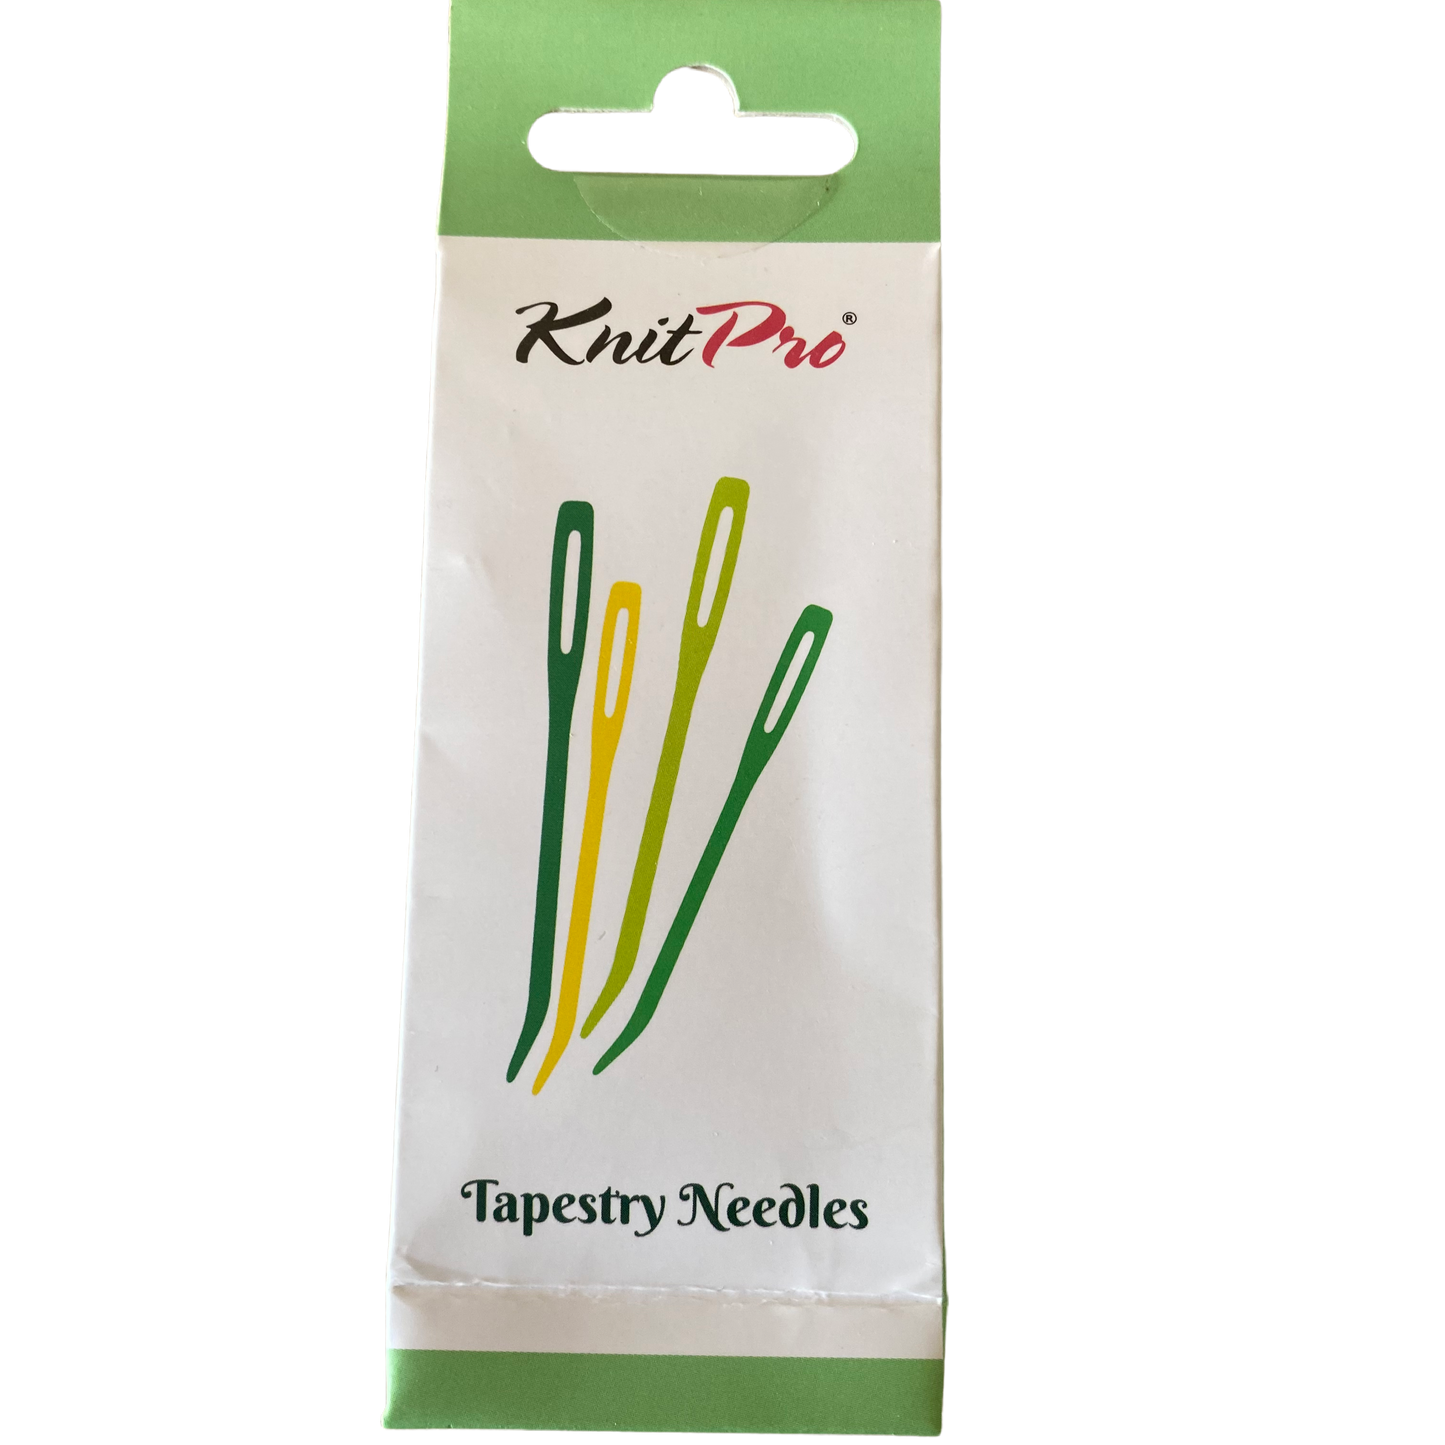 Knit Pro - Tapestry Needles